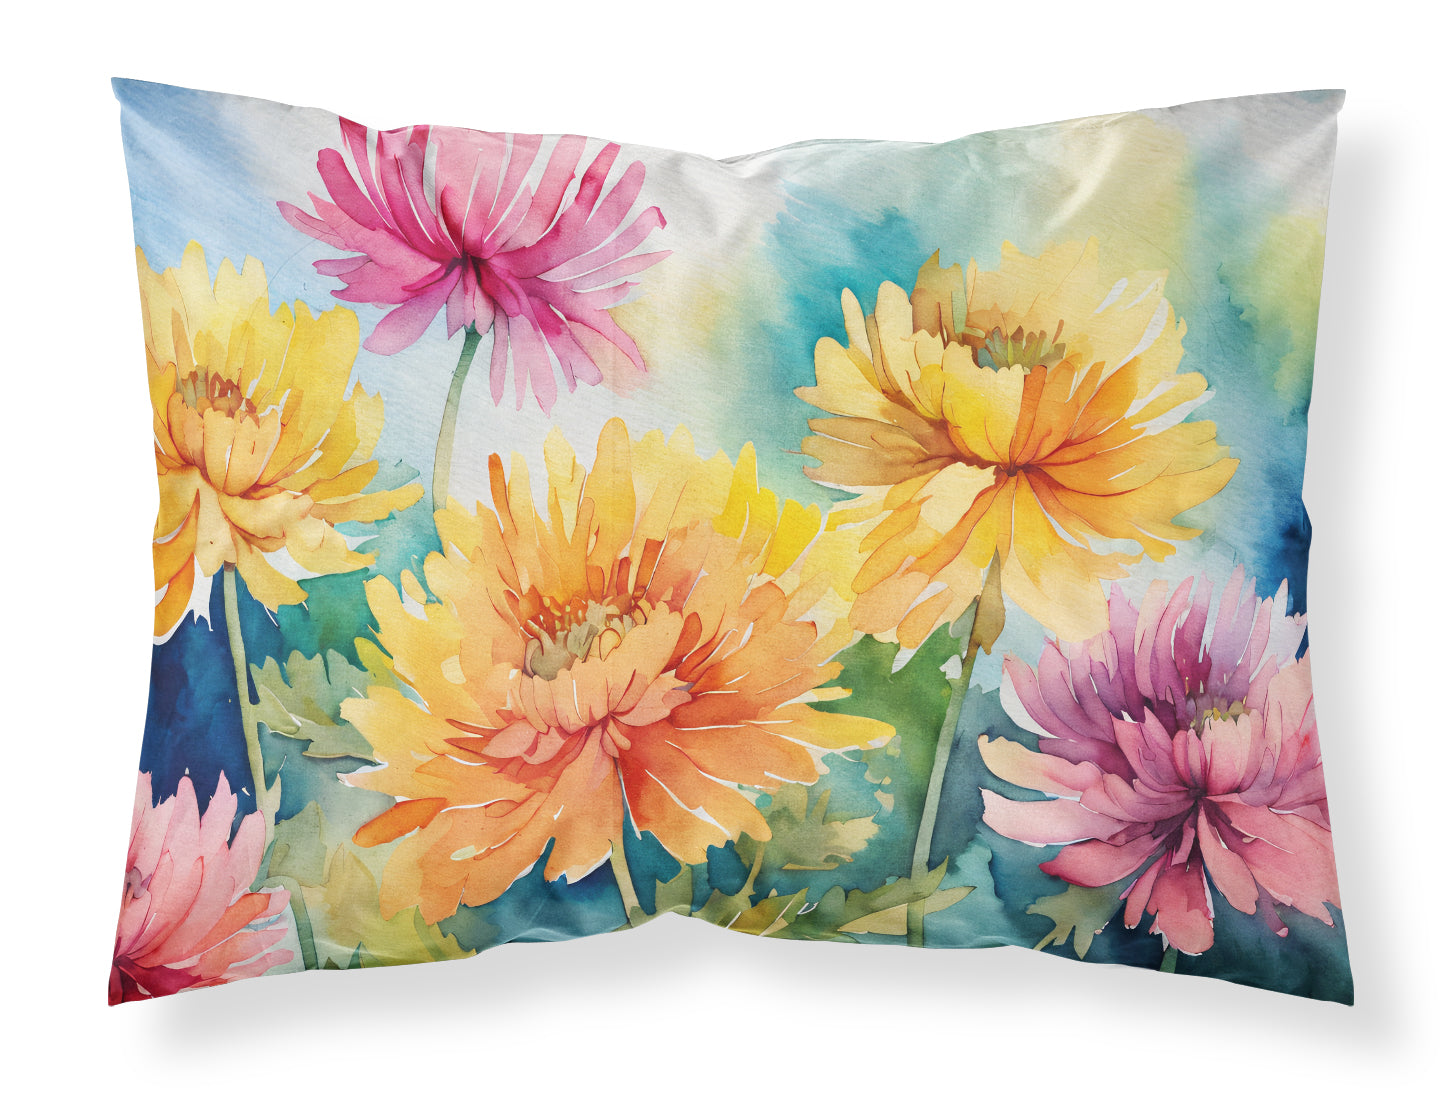 Buy this Chrysanthemums in Watercolor Fabric Standard Pillowcase